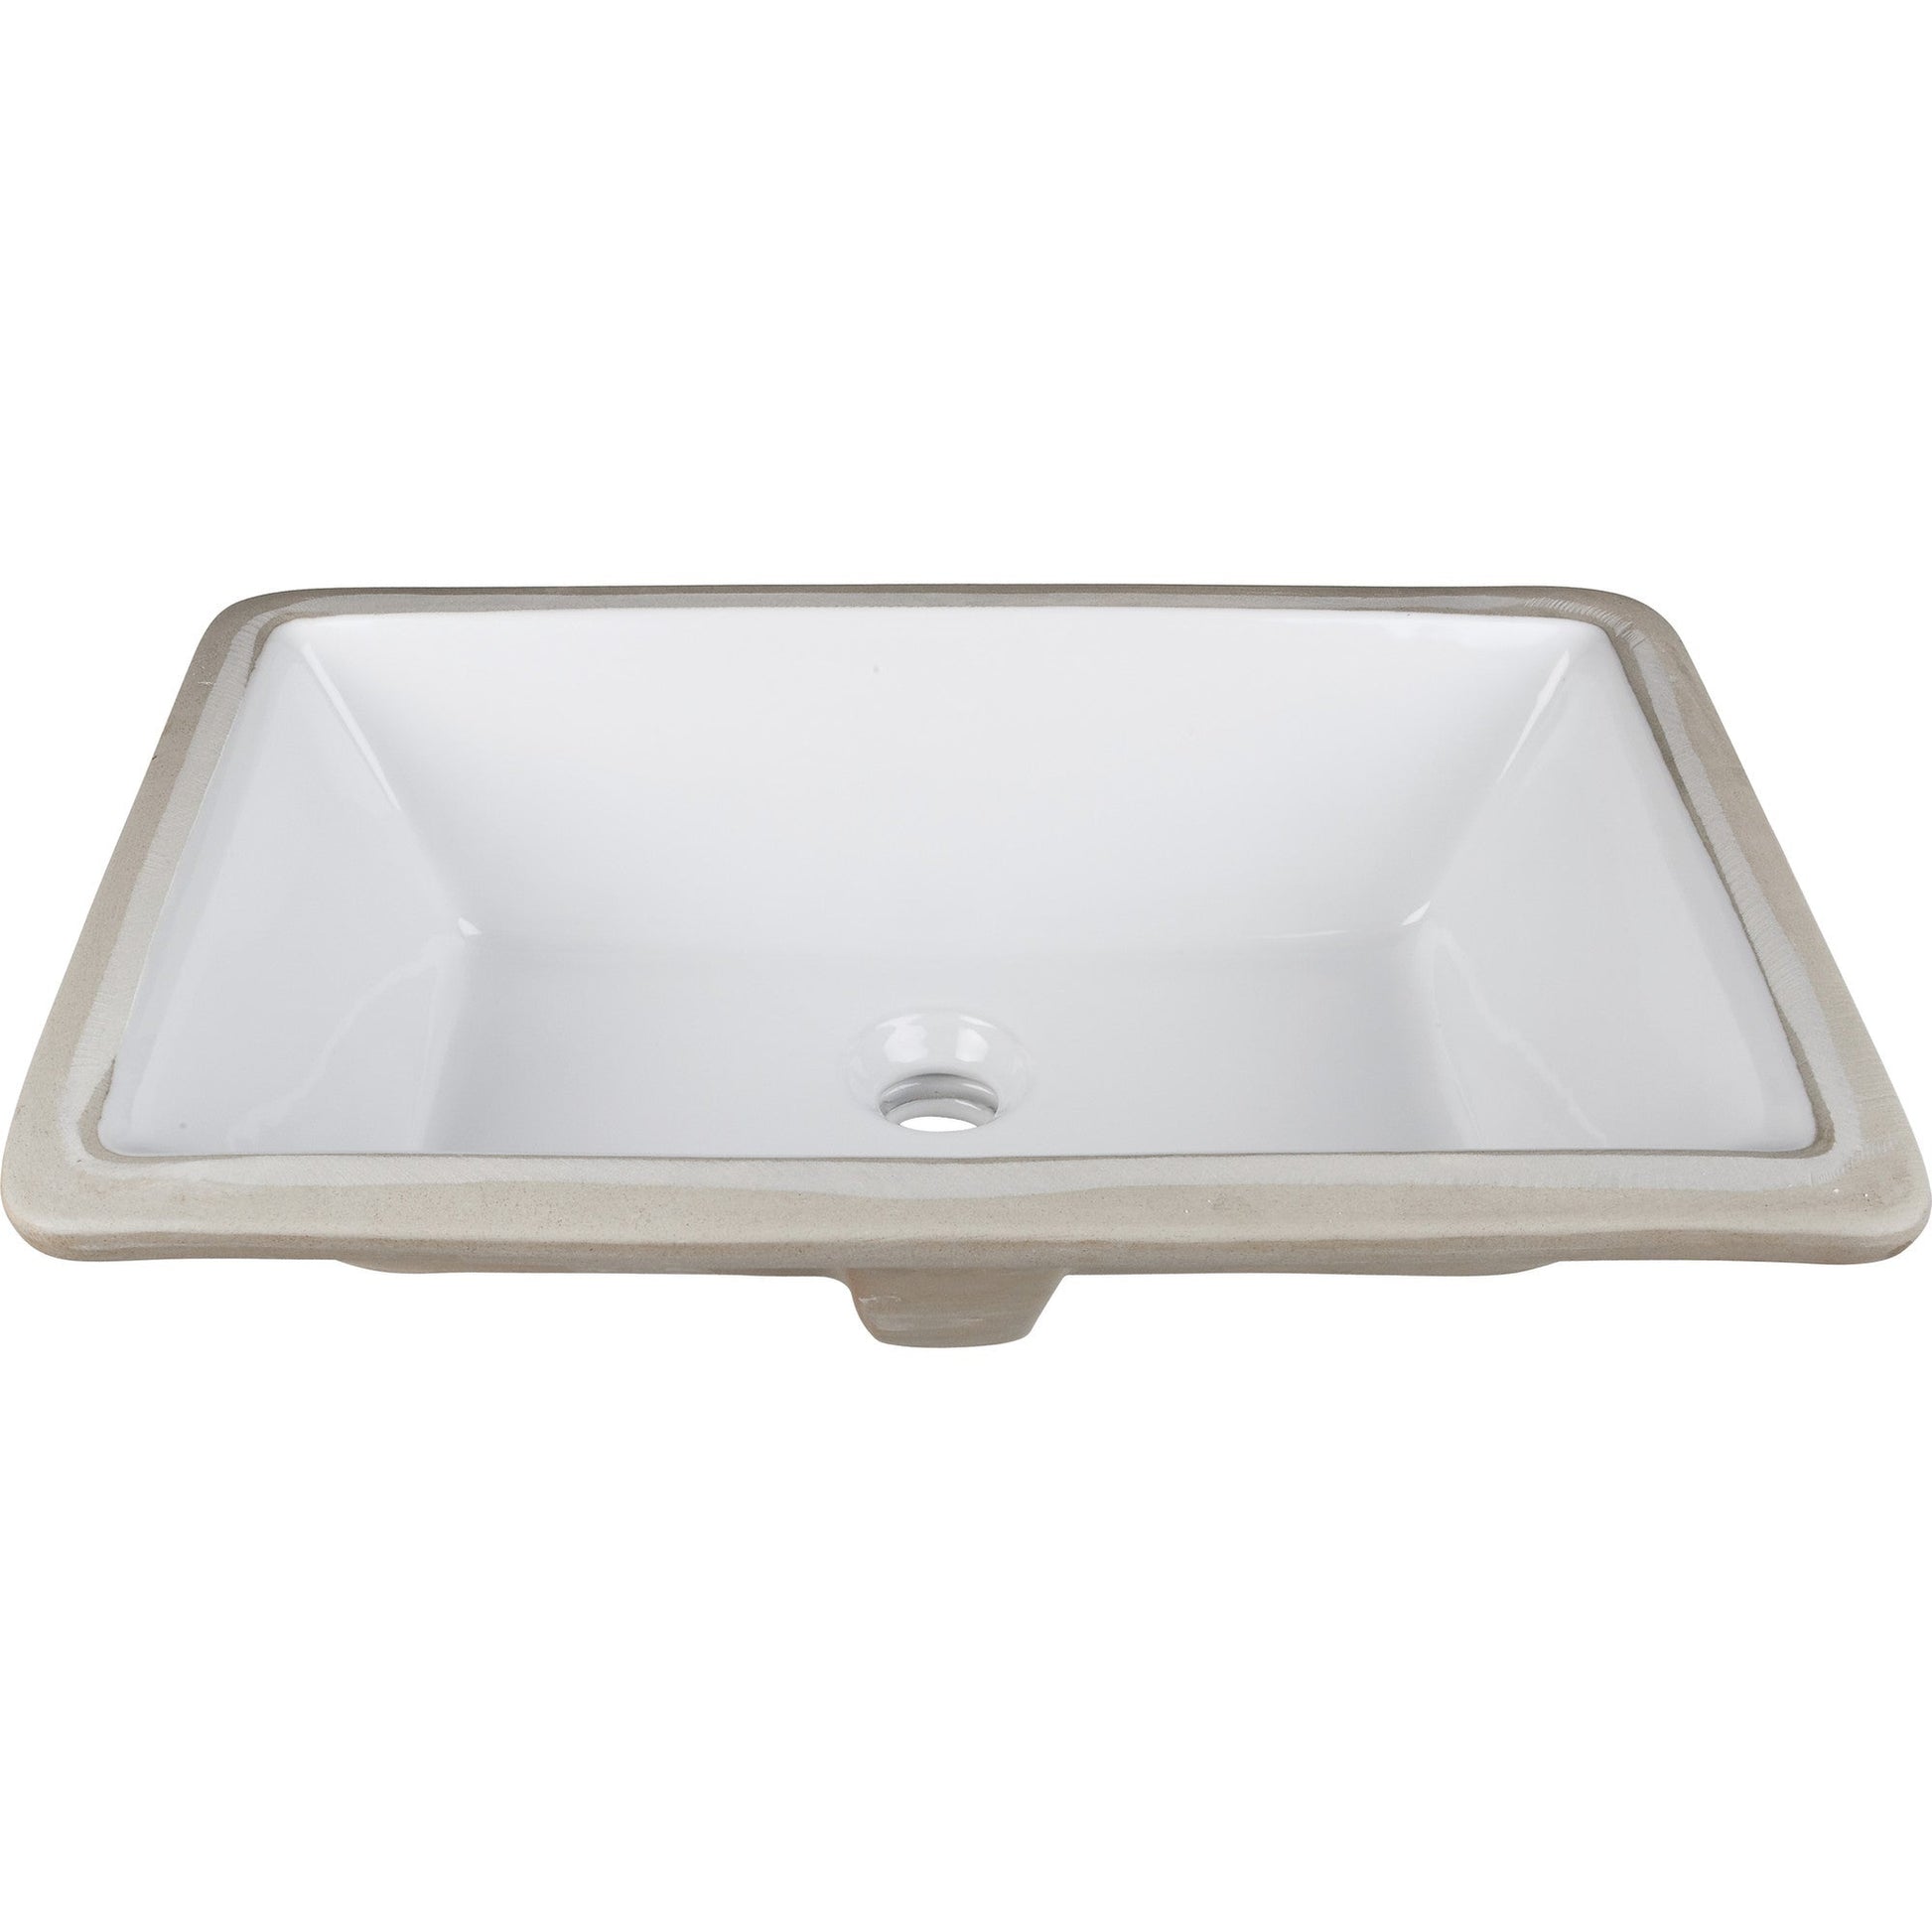 Hardware Resources Jeffrey Alexander Katara 48" Green Freestanding Vanity With White Carrara Marble Vanity Top, Backsplash and Rectangle Undermount Sink